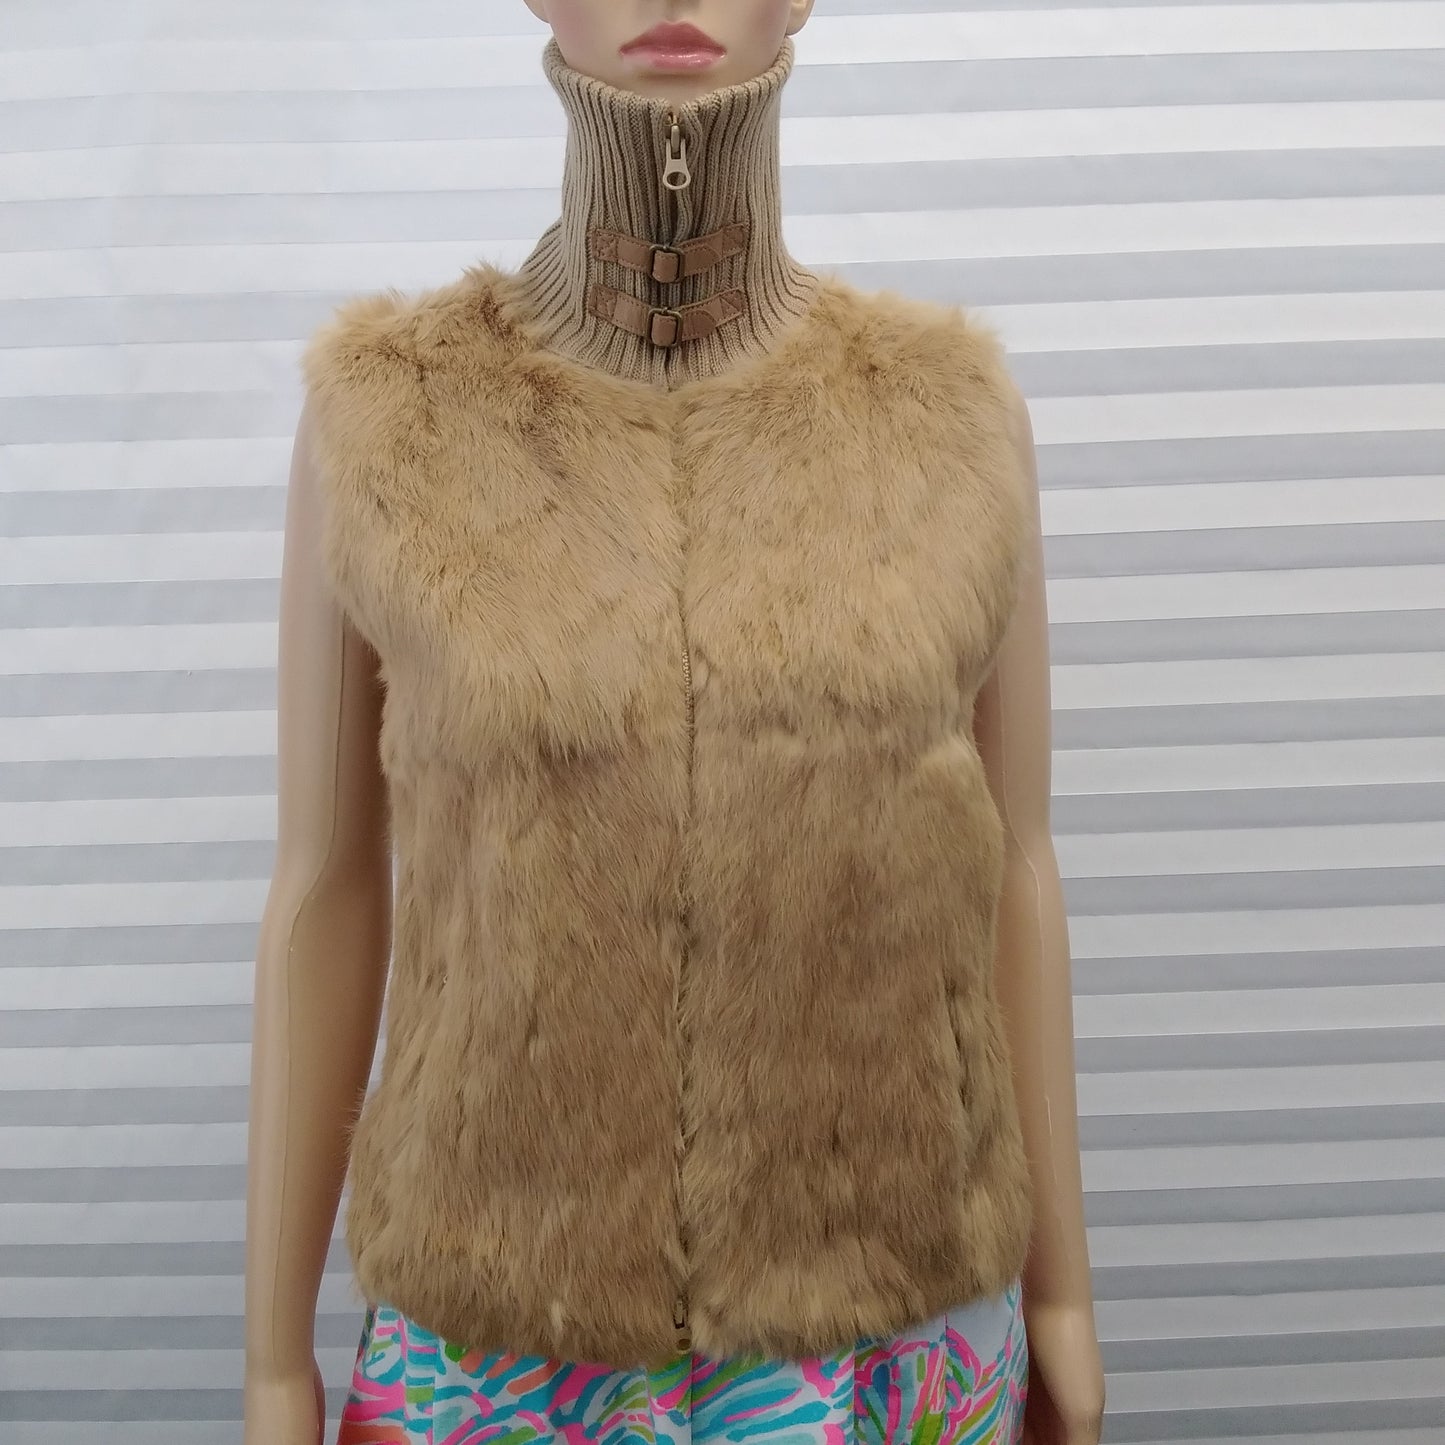 Barami Tan Rabbit Fur Vest - Size: 4